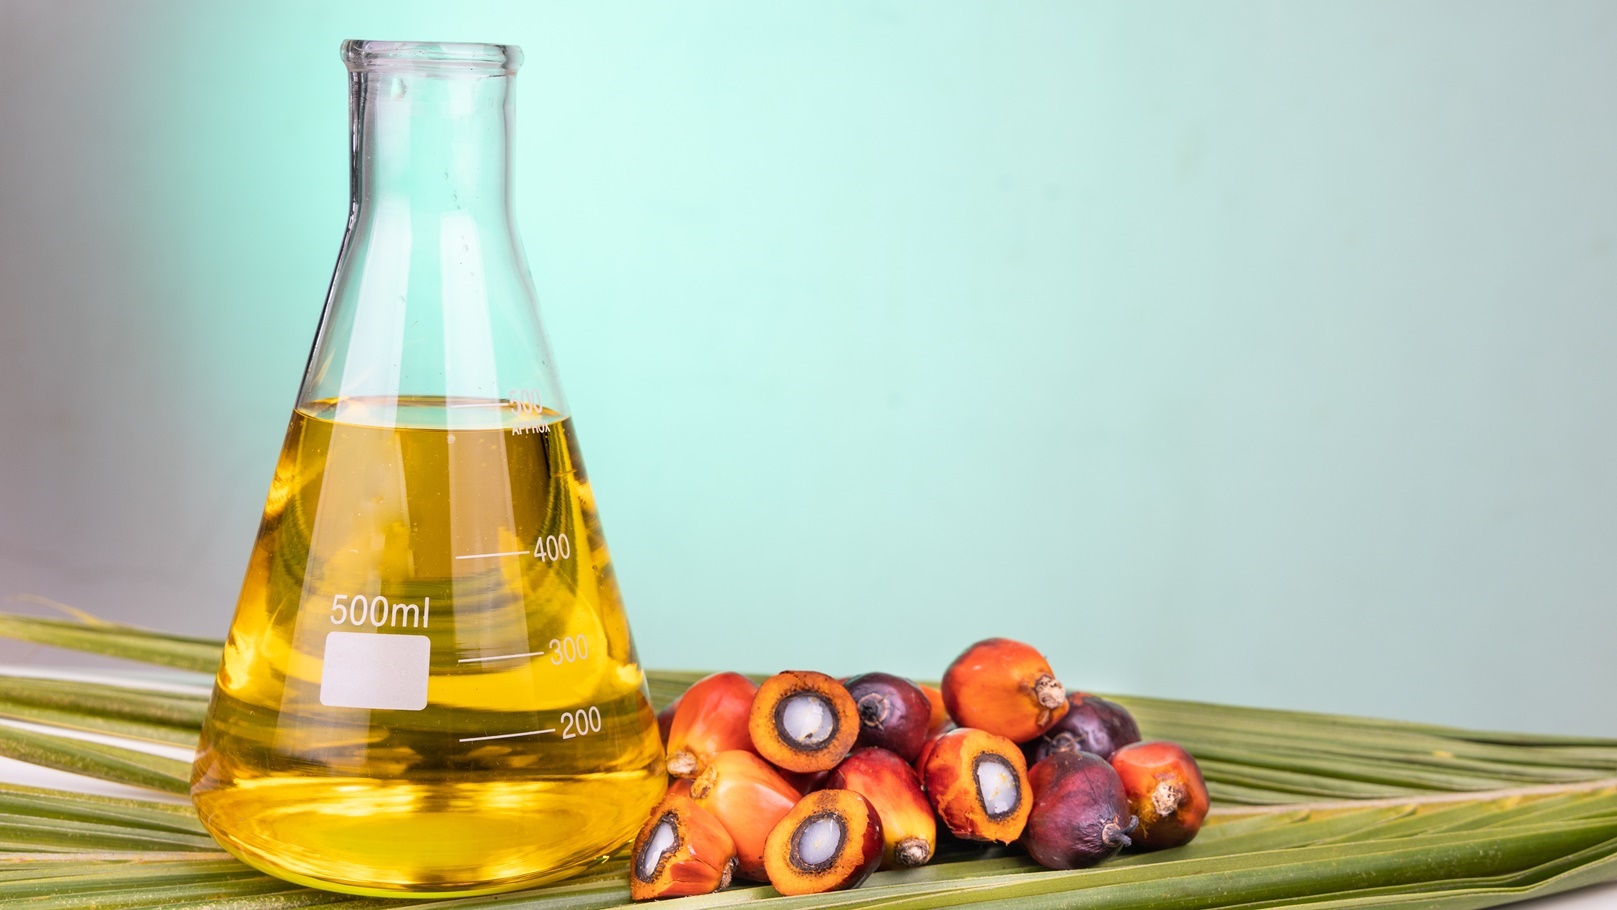 oil-palm-fruits-with-biofuel-in-beaker-in-laborato-2021-08-31-08-46-50-utc